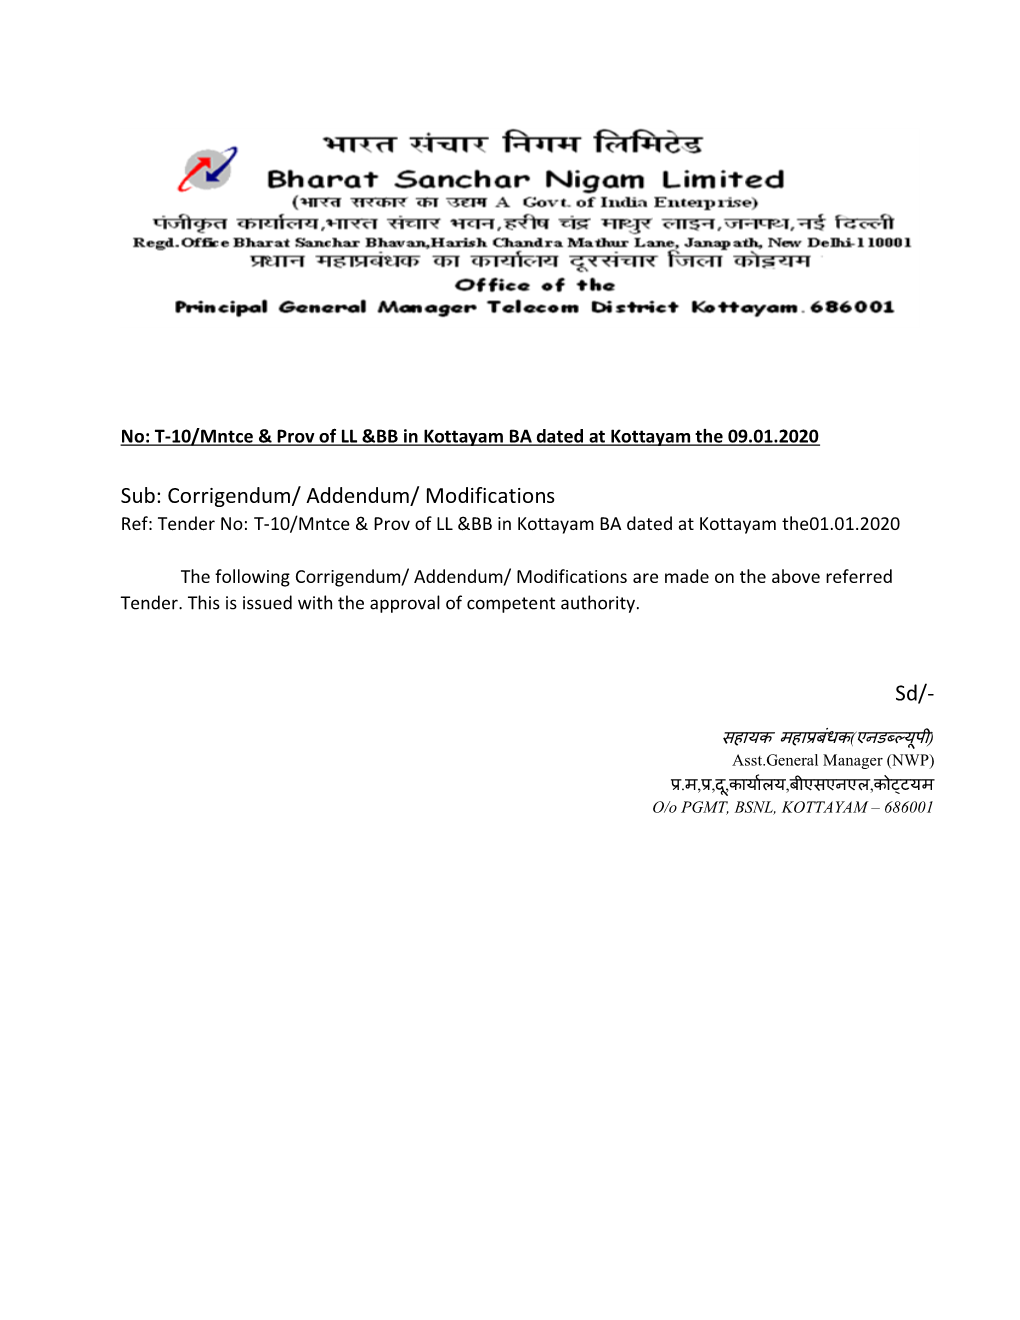 Addendum/ Modifications Ref: Tender No: T-10/Mntce & Prov of LL &BB in Kottayam BA Dated at Kottayam The01.01.2020